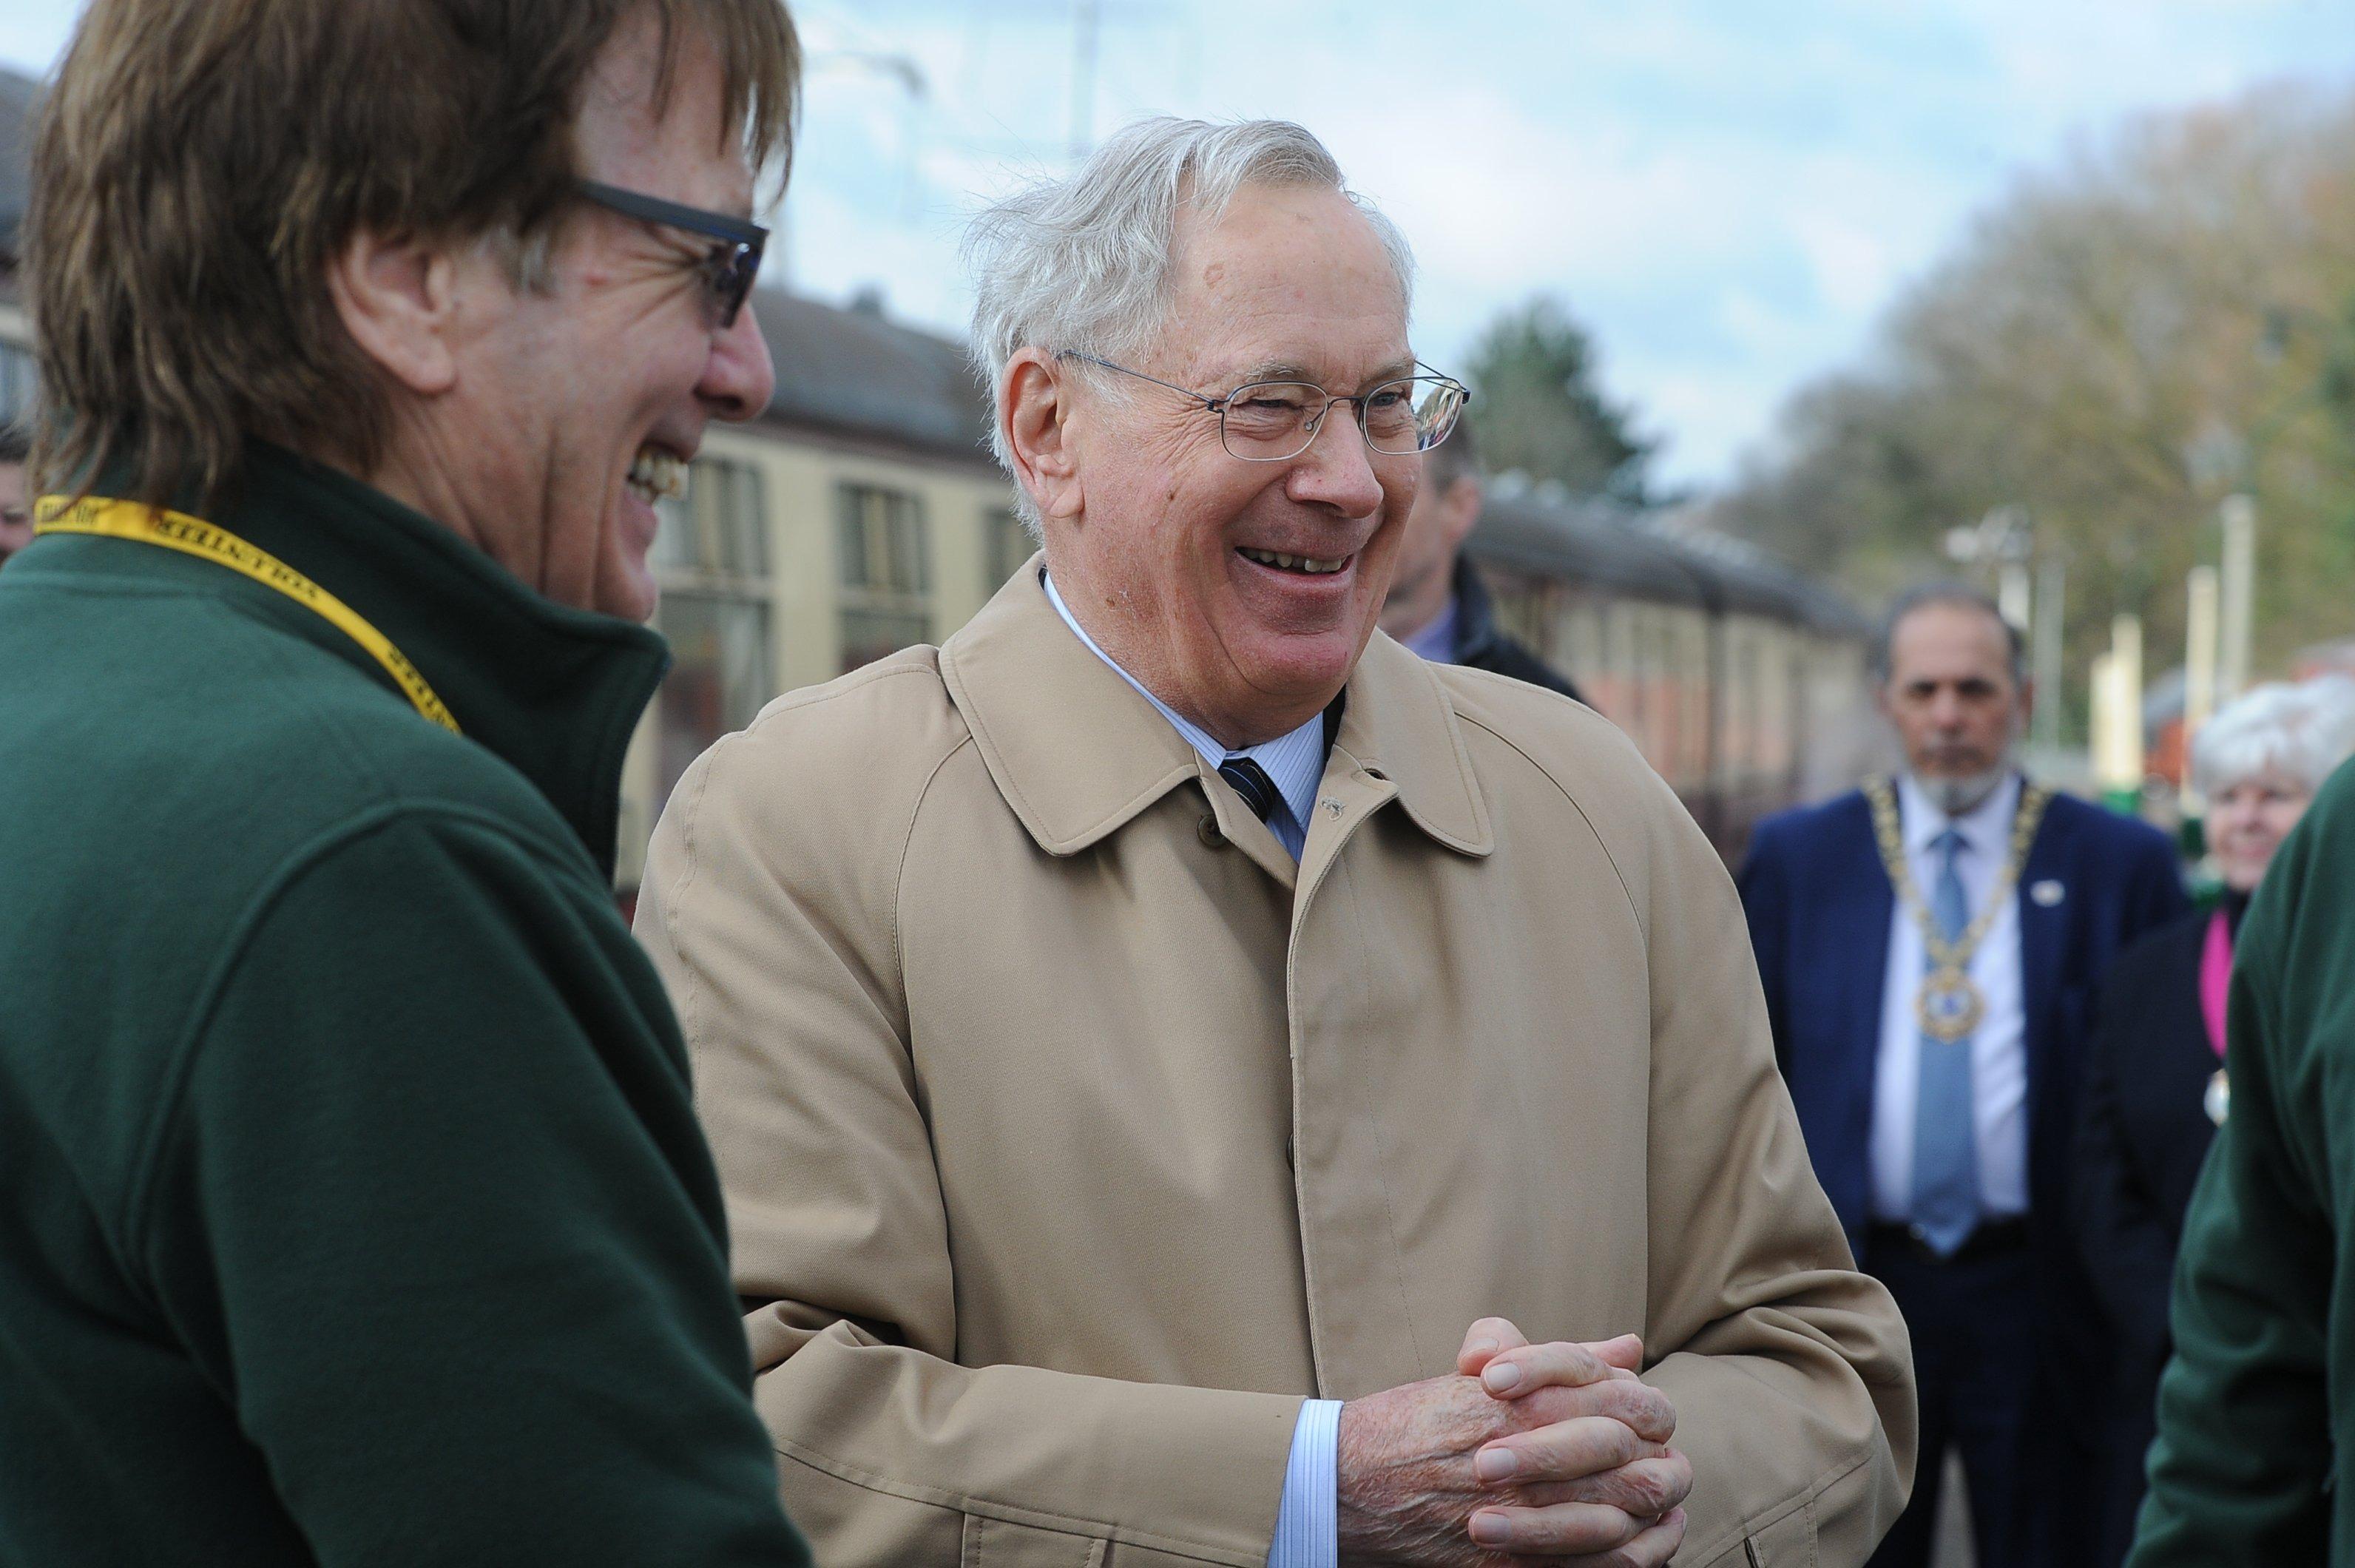 Duke of Gloucester visits Railworld in Peterborough EMN-200227-173940009